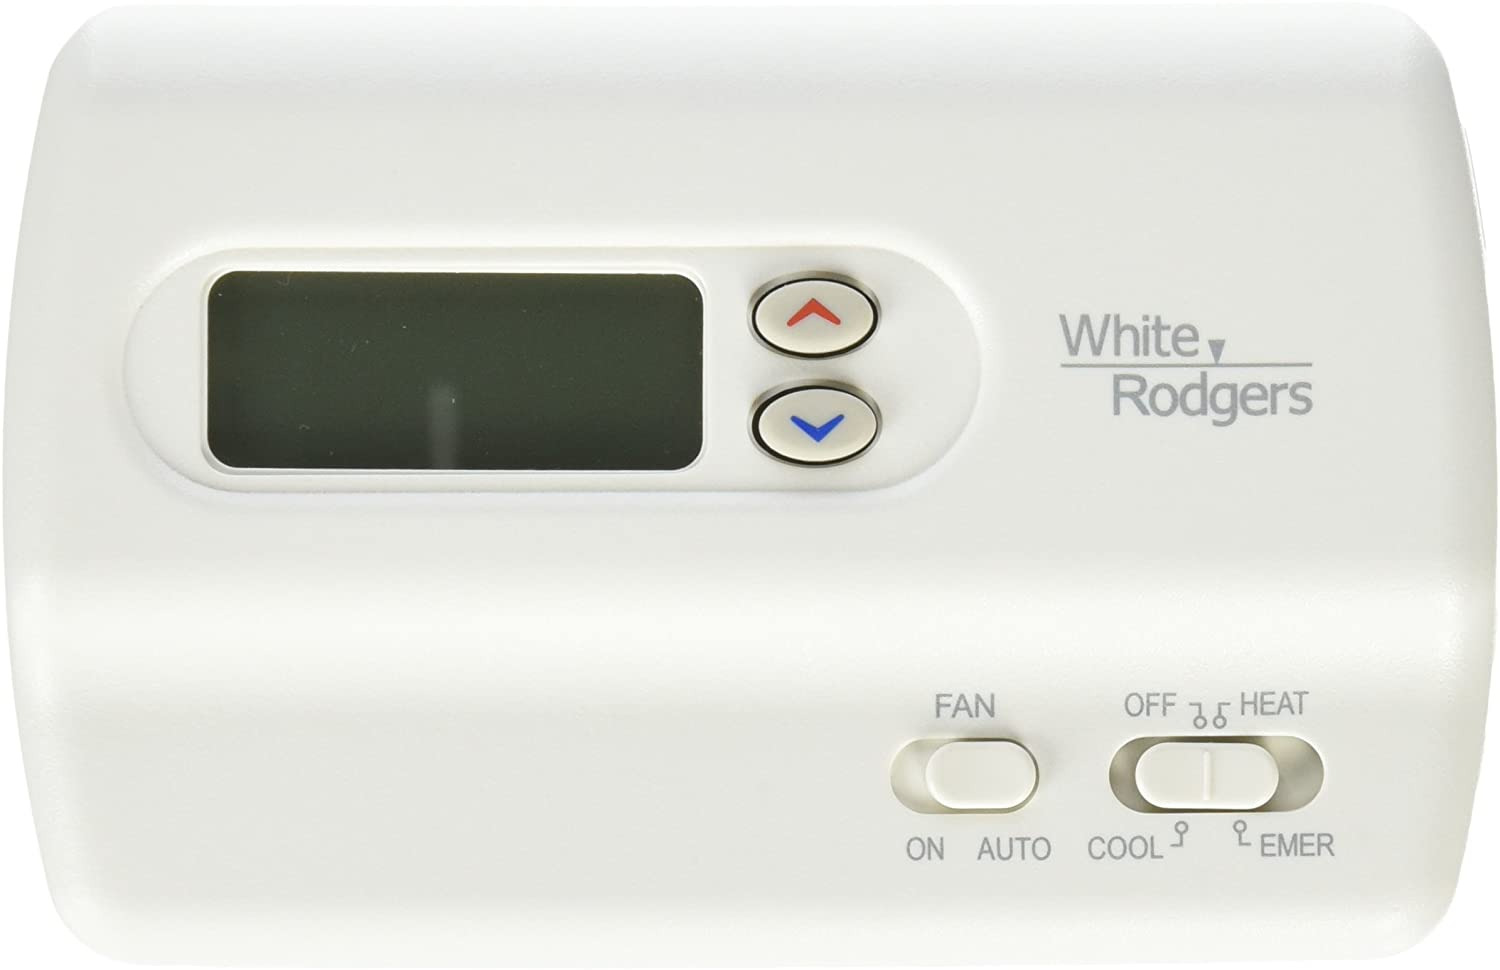 White Rodgers Emerson 1F89 211 Heat Pump Non Programmable Thermostat 3.65 LB